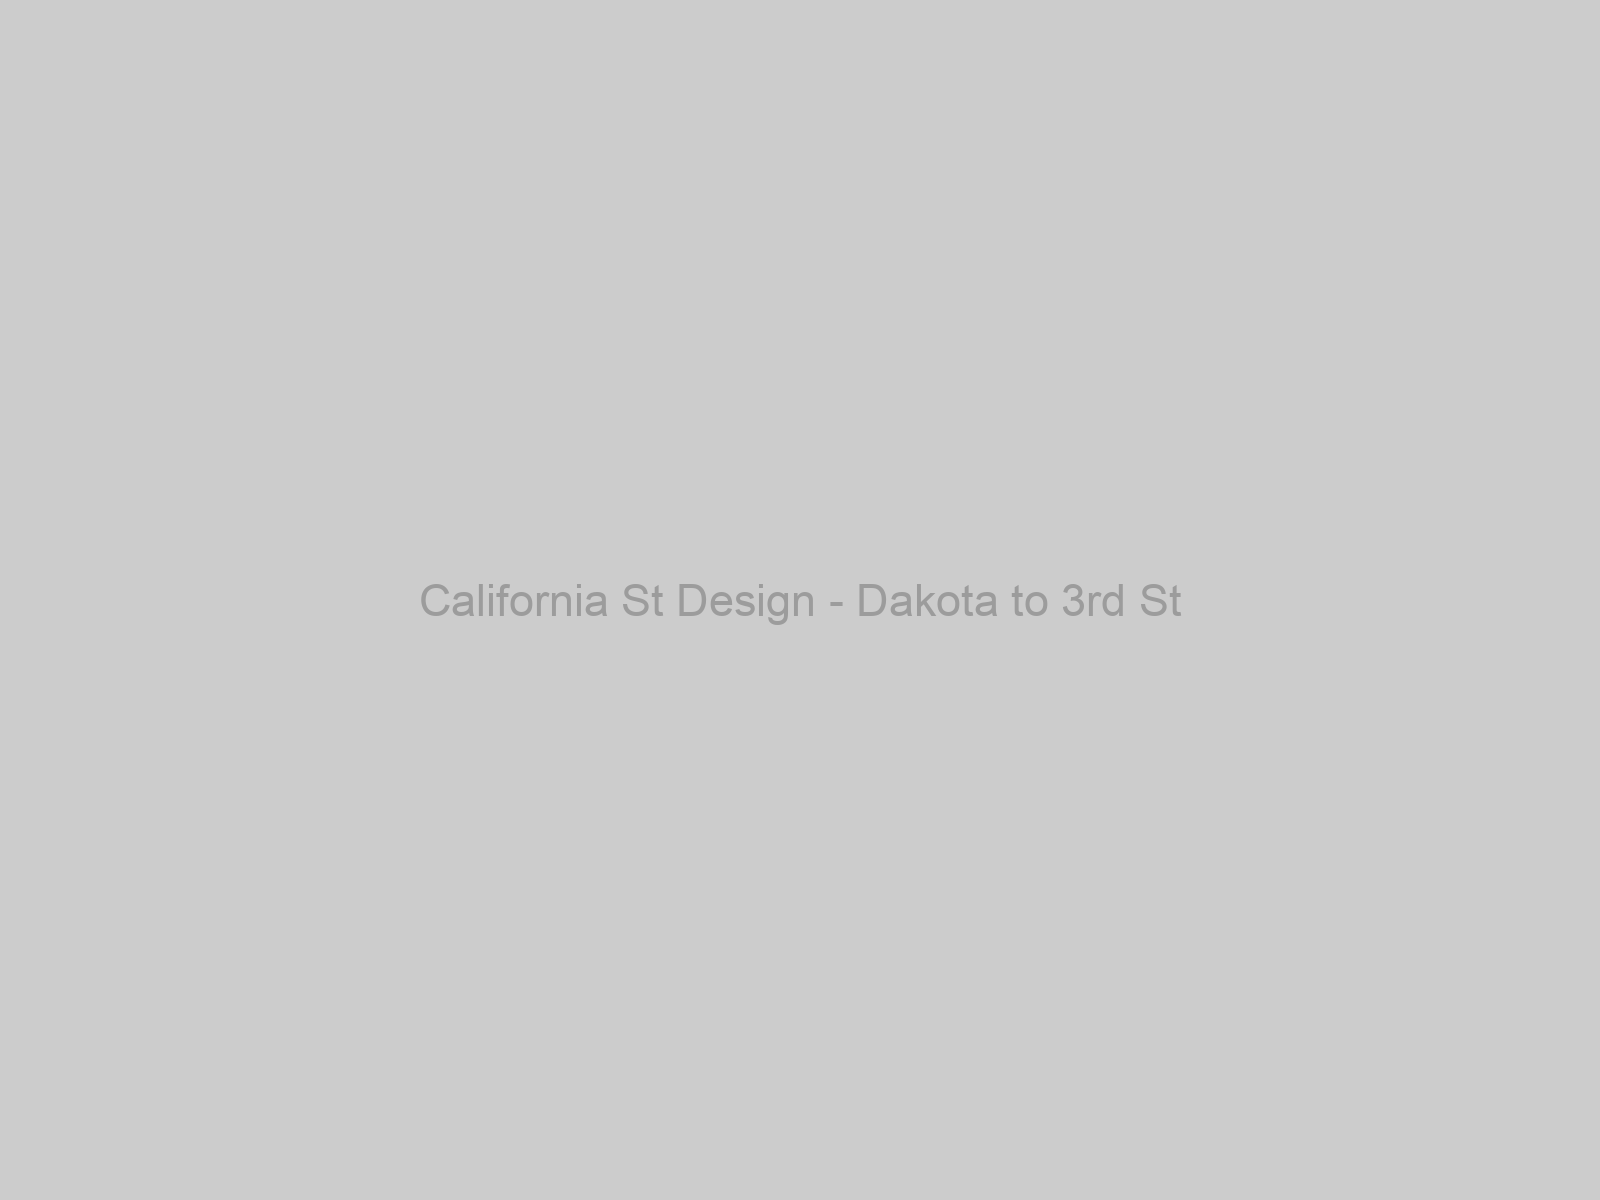 California St Design - Dakota to 3rd St